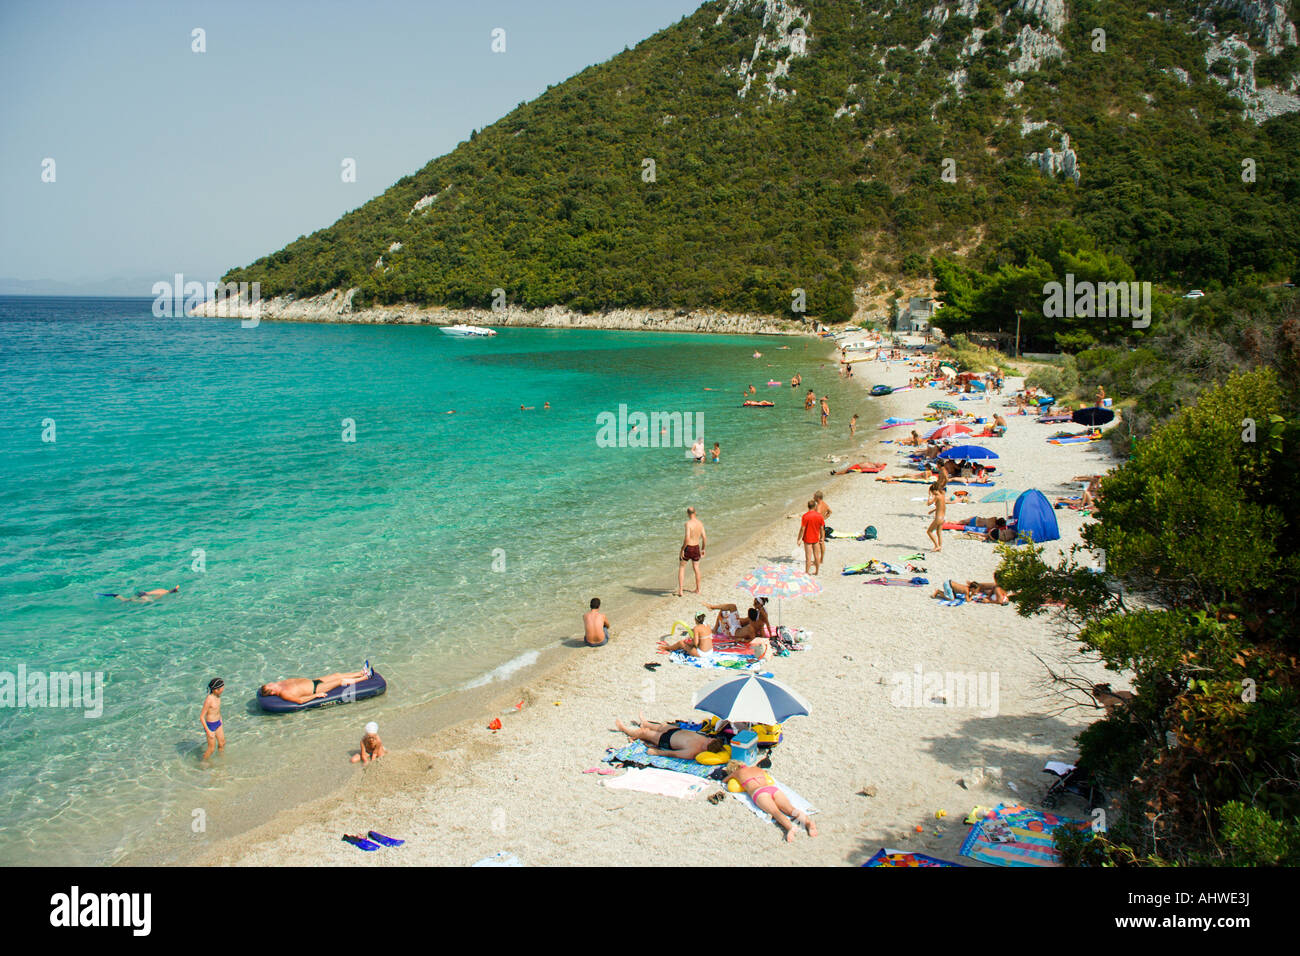 Divna beach on Peljesac Peninsula Croatia Stock Photo - Alamy